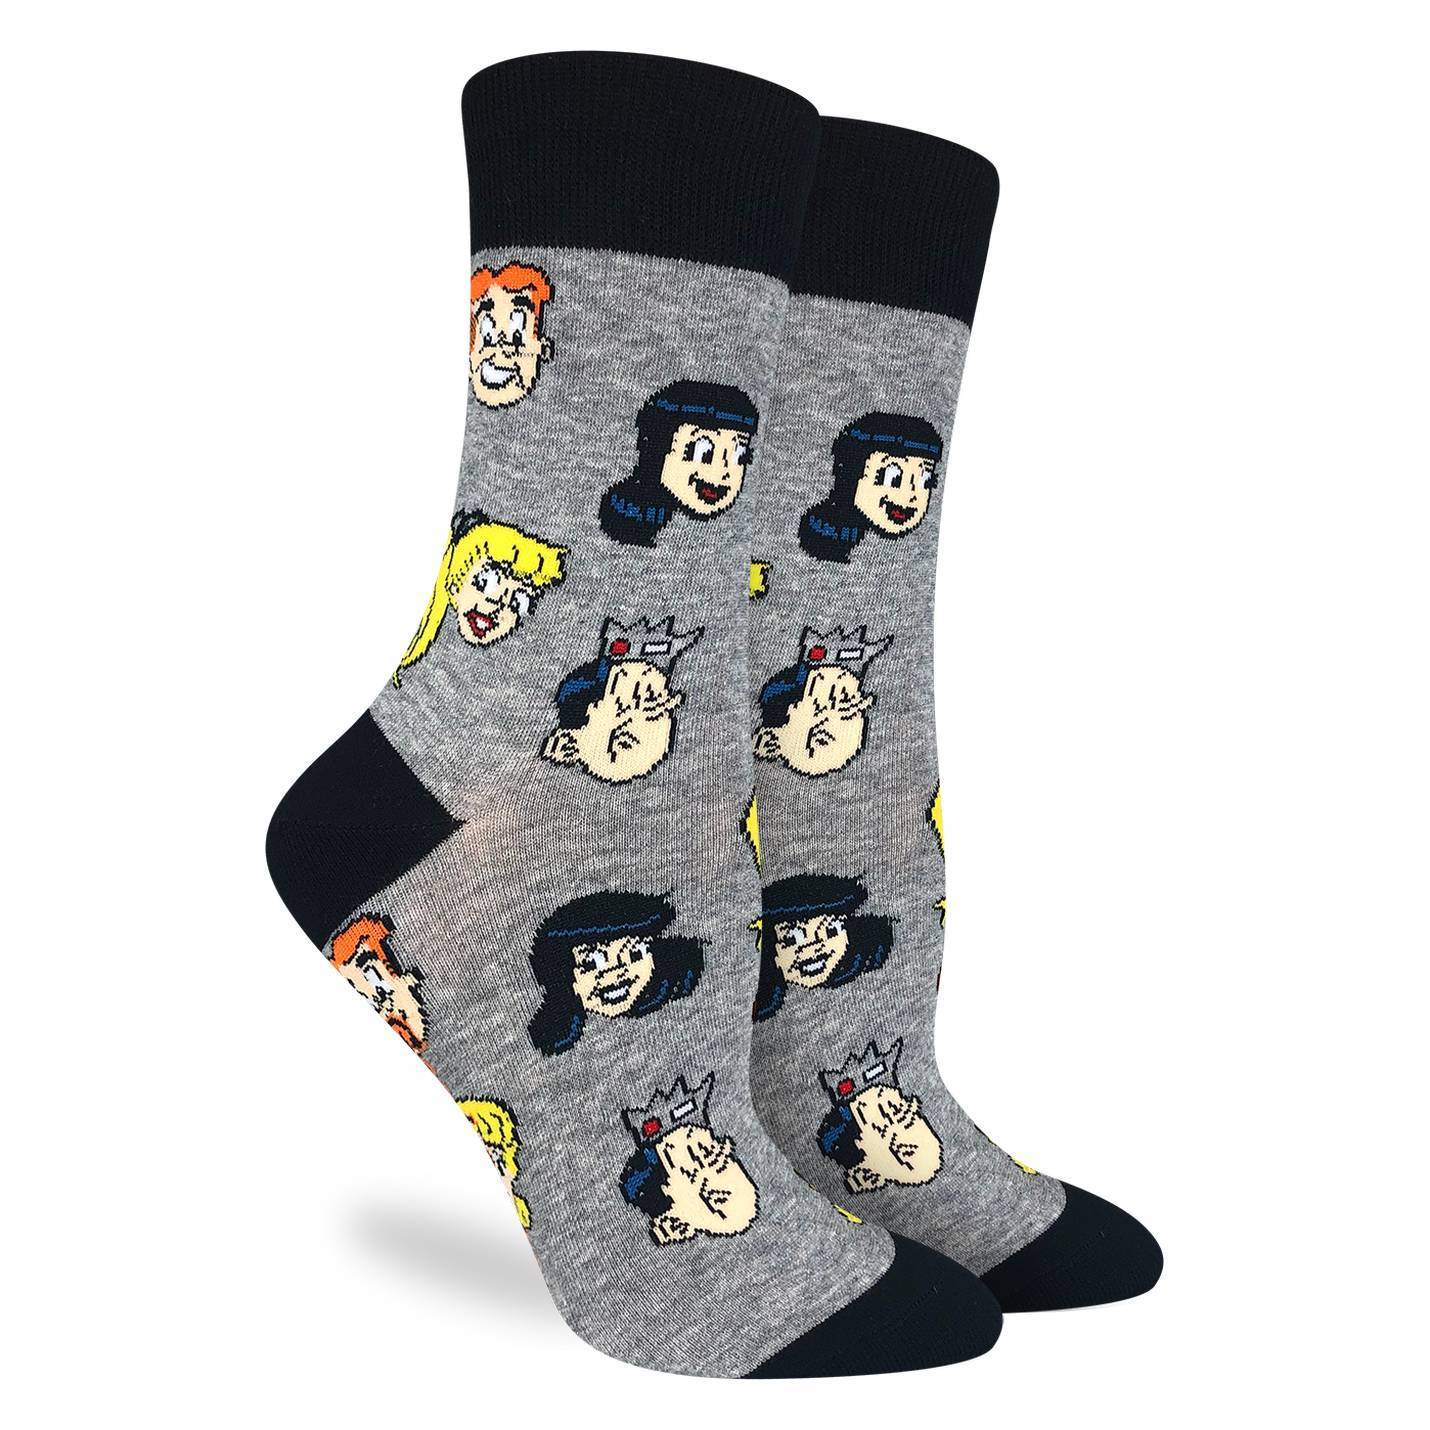 Socks - Women's Crew - Archie Comic Characters